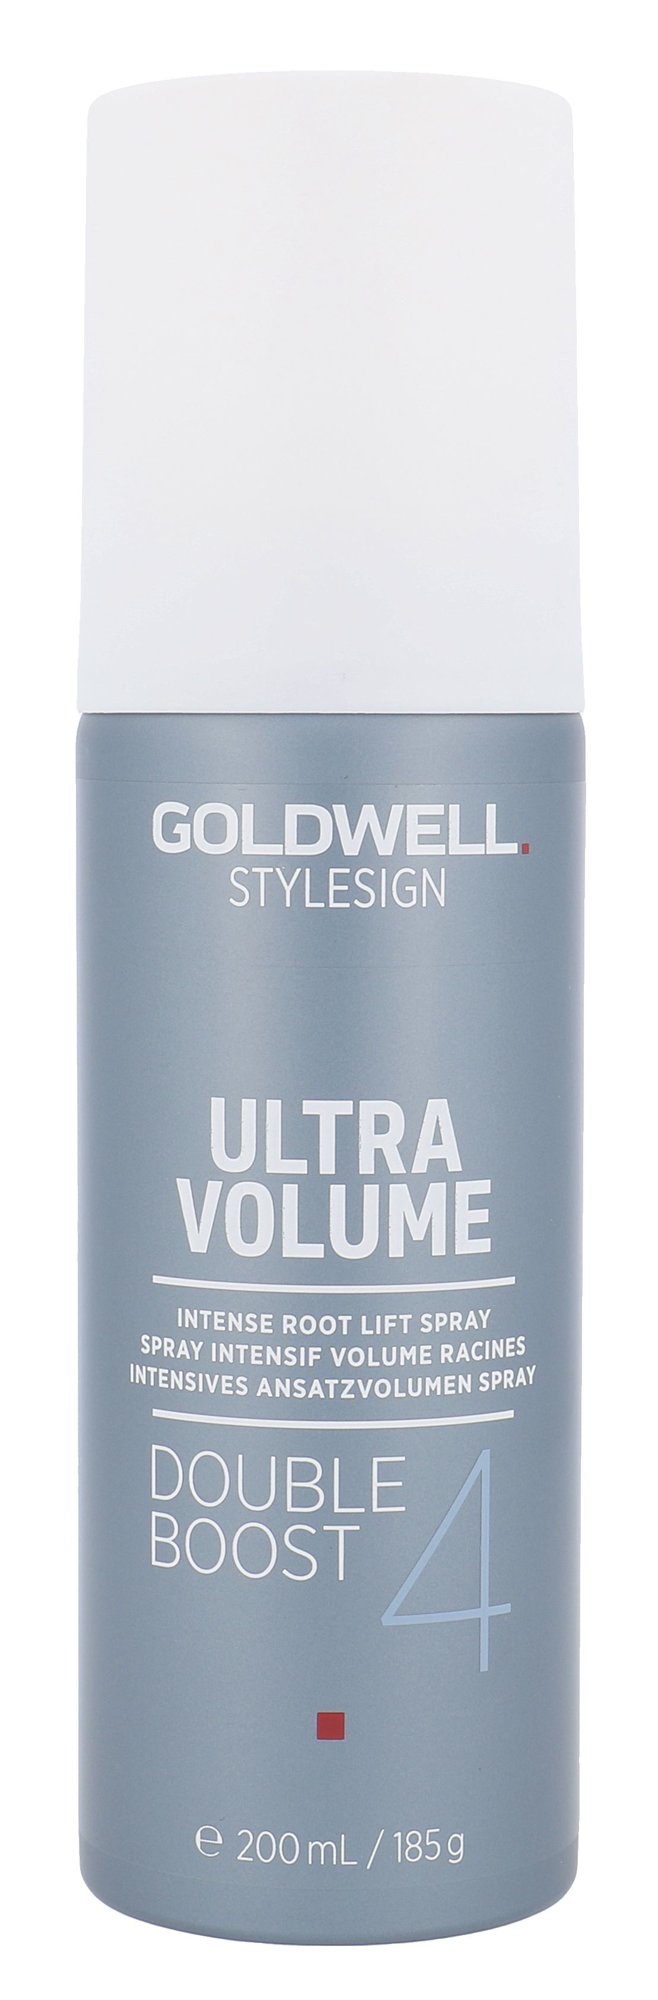 Goldwell Style Sign Ultra Volume plaukų lakas